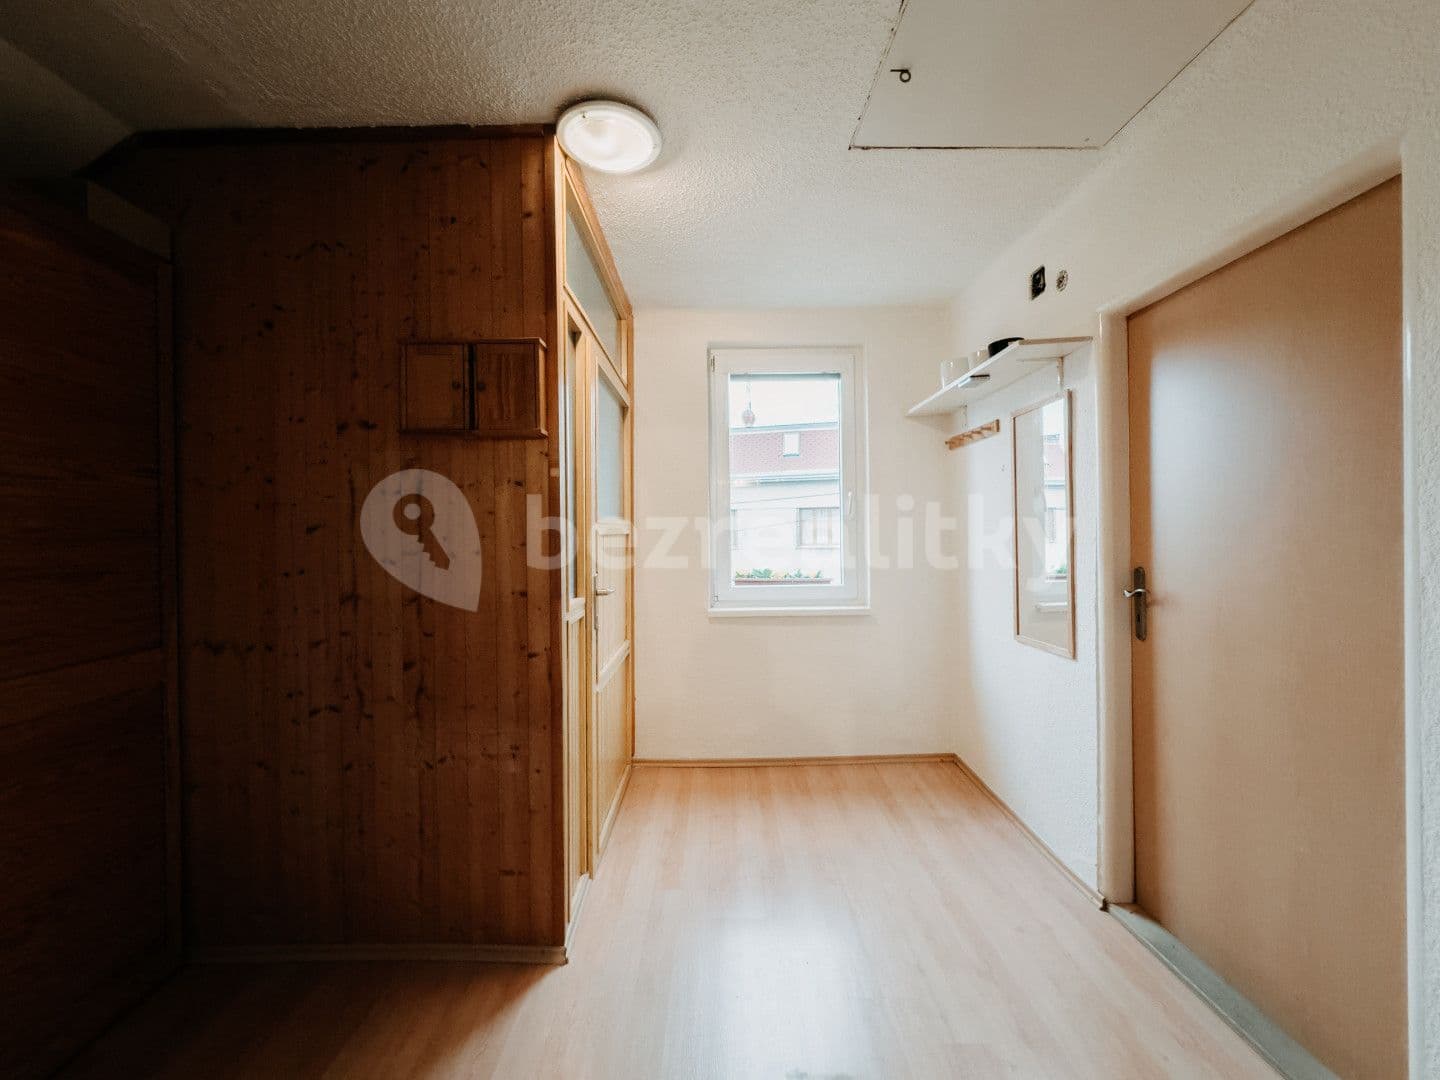 4 bedroom flat for sale, 100 m², Uhelná, Jablonec nad Nisou, Liberecký Region